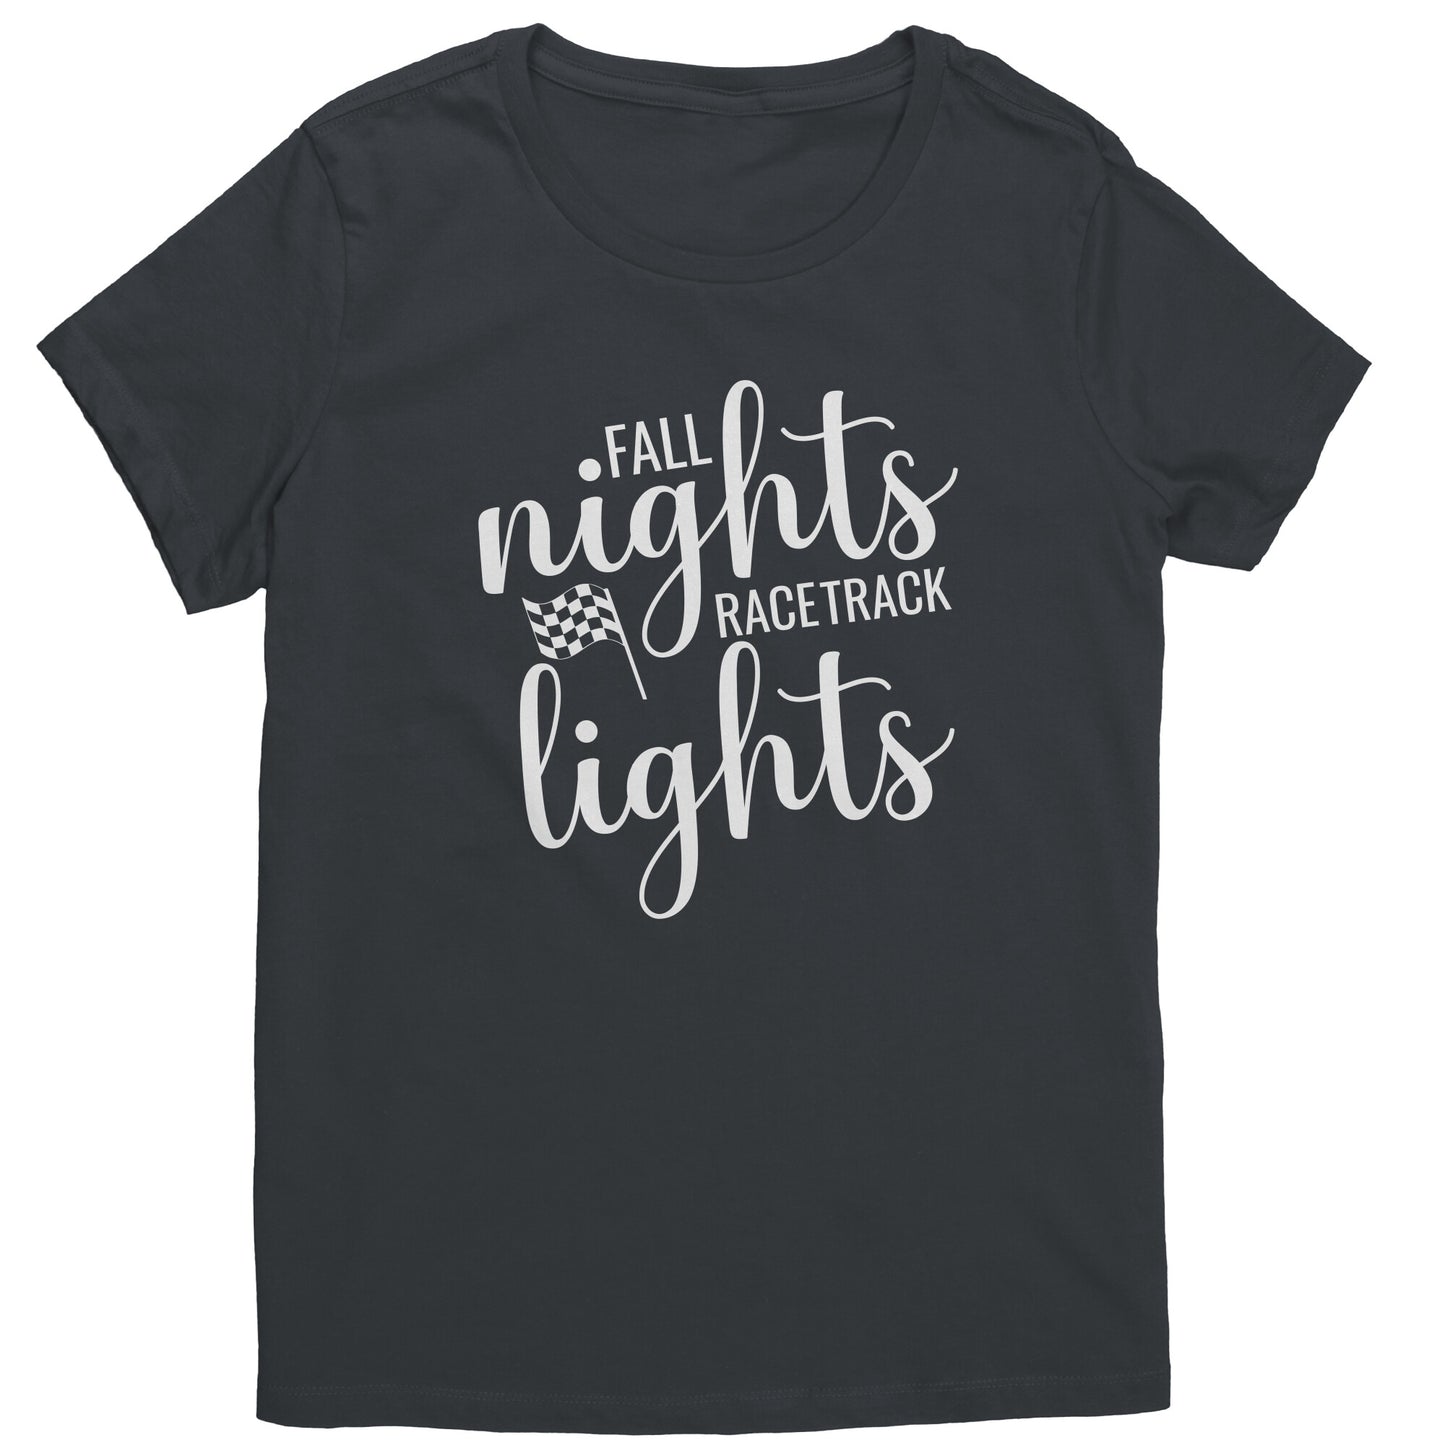 Fall Nights Racetrack Lights T-Shirt